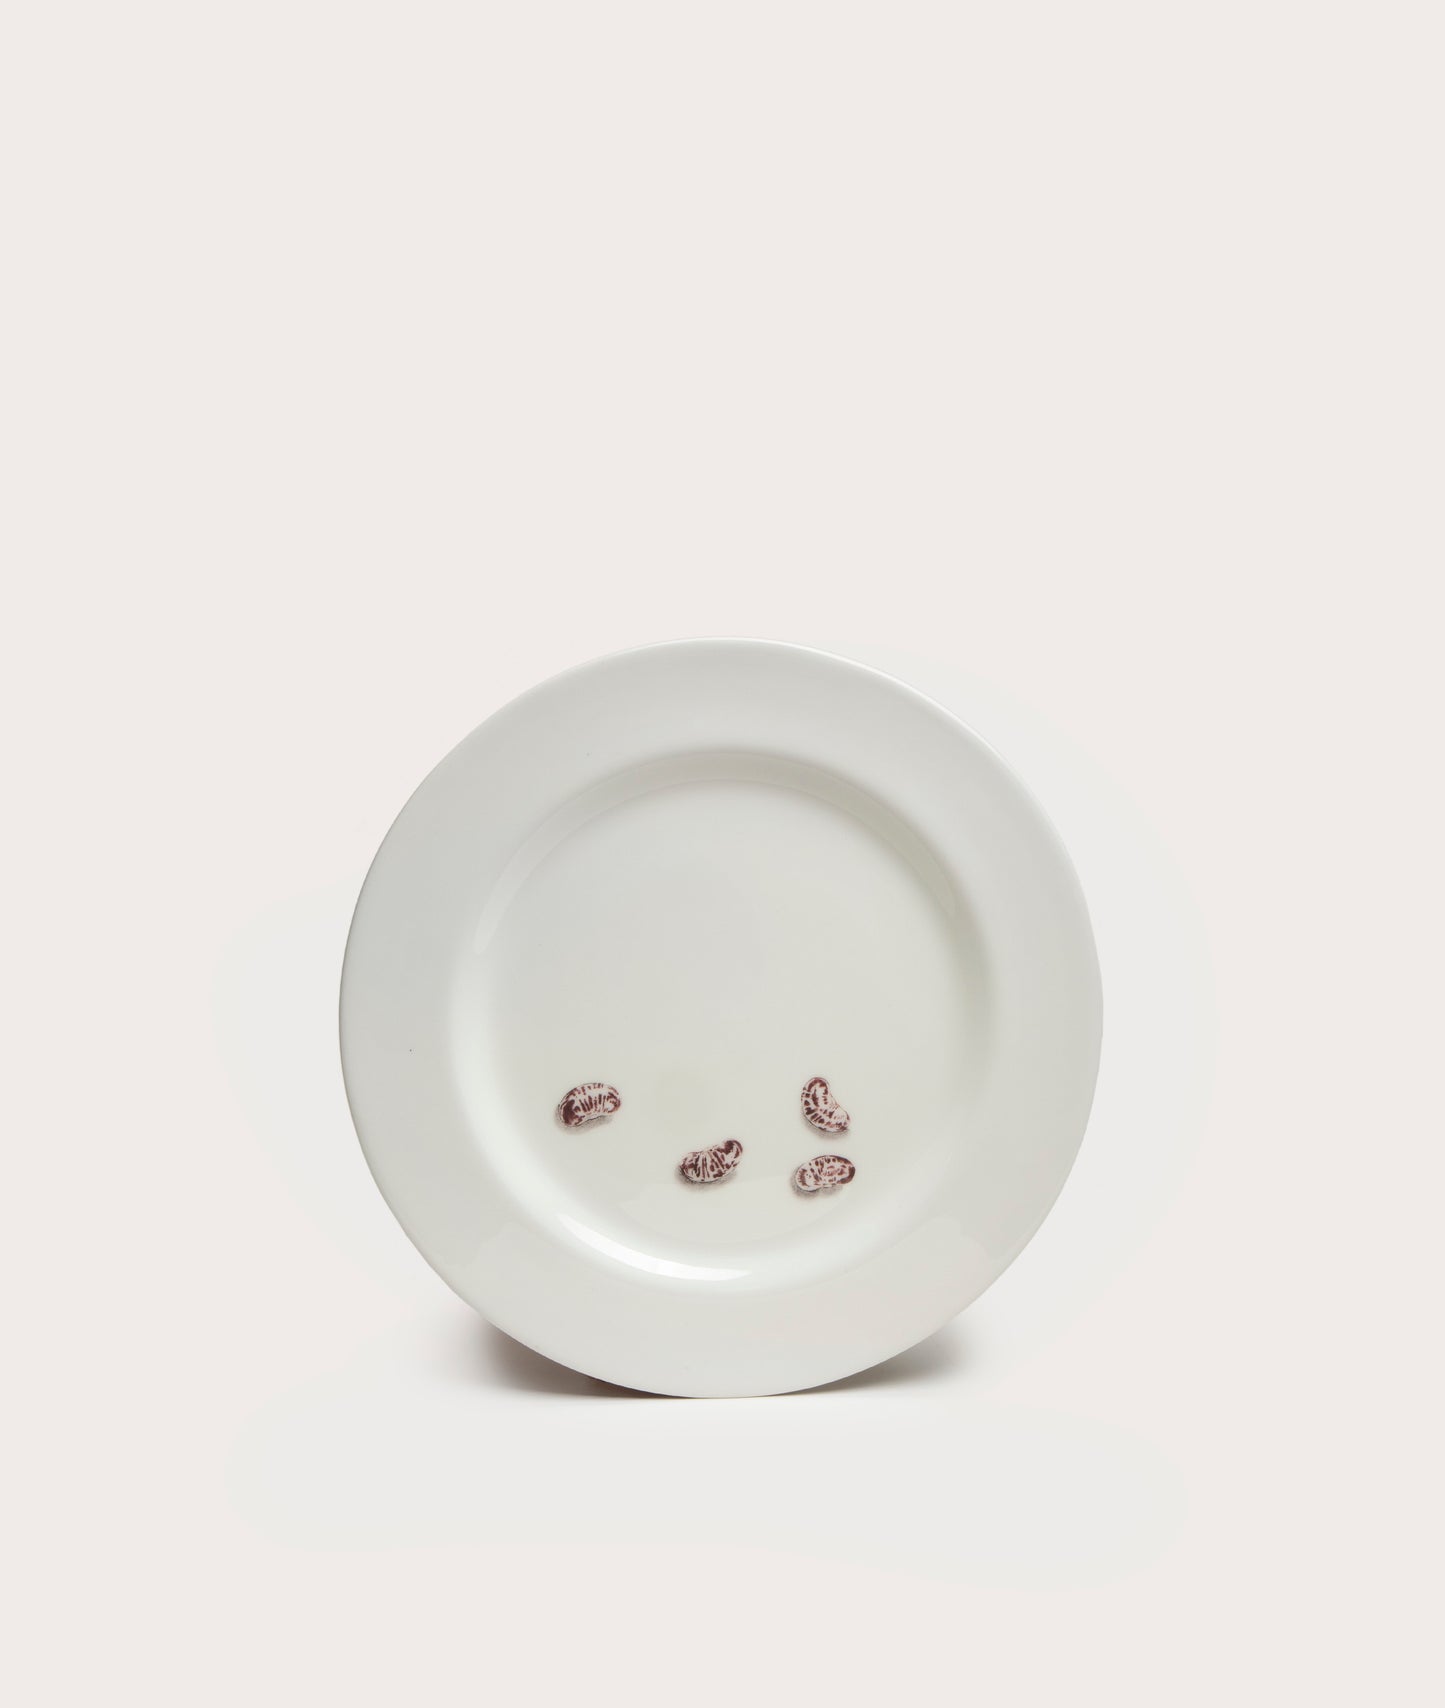 Dinner Plate with Bean Trompe L'oeil